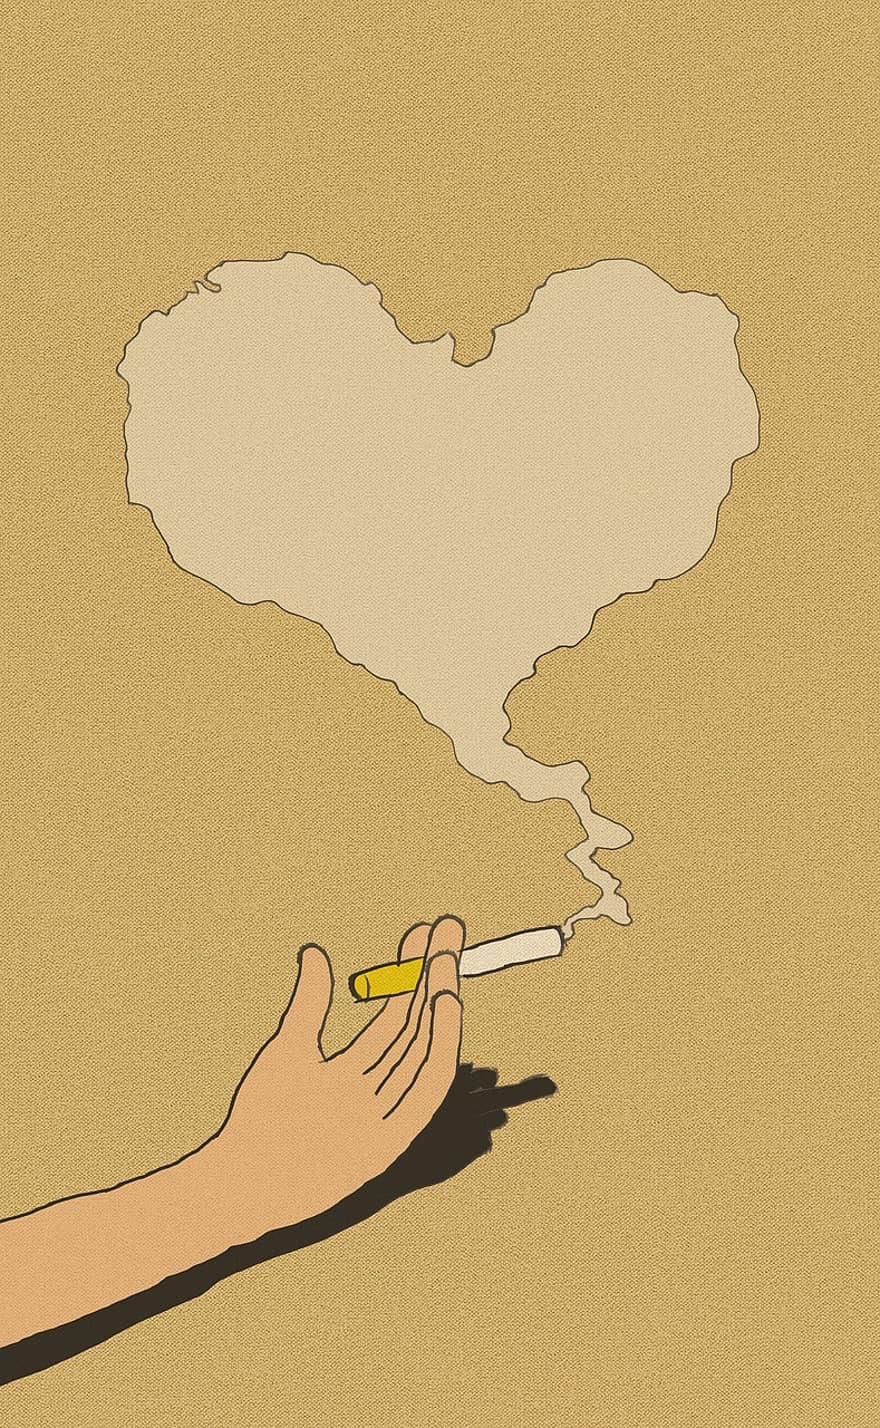 कार्टून, हाथ से रंगी, सिगरेट, धूम्रपान, हाथ, प्रेम, दिल, ब्राउन हार्ट, भूरा कार्टून